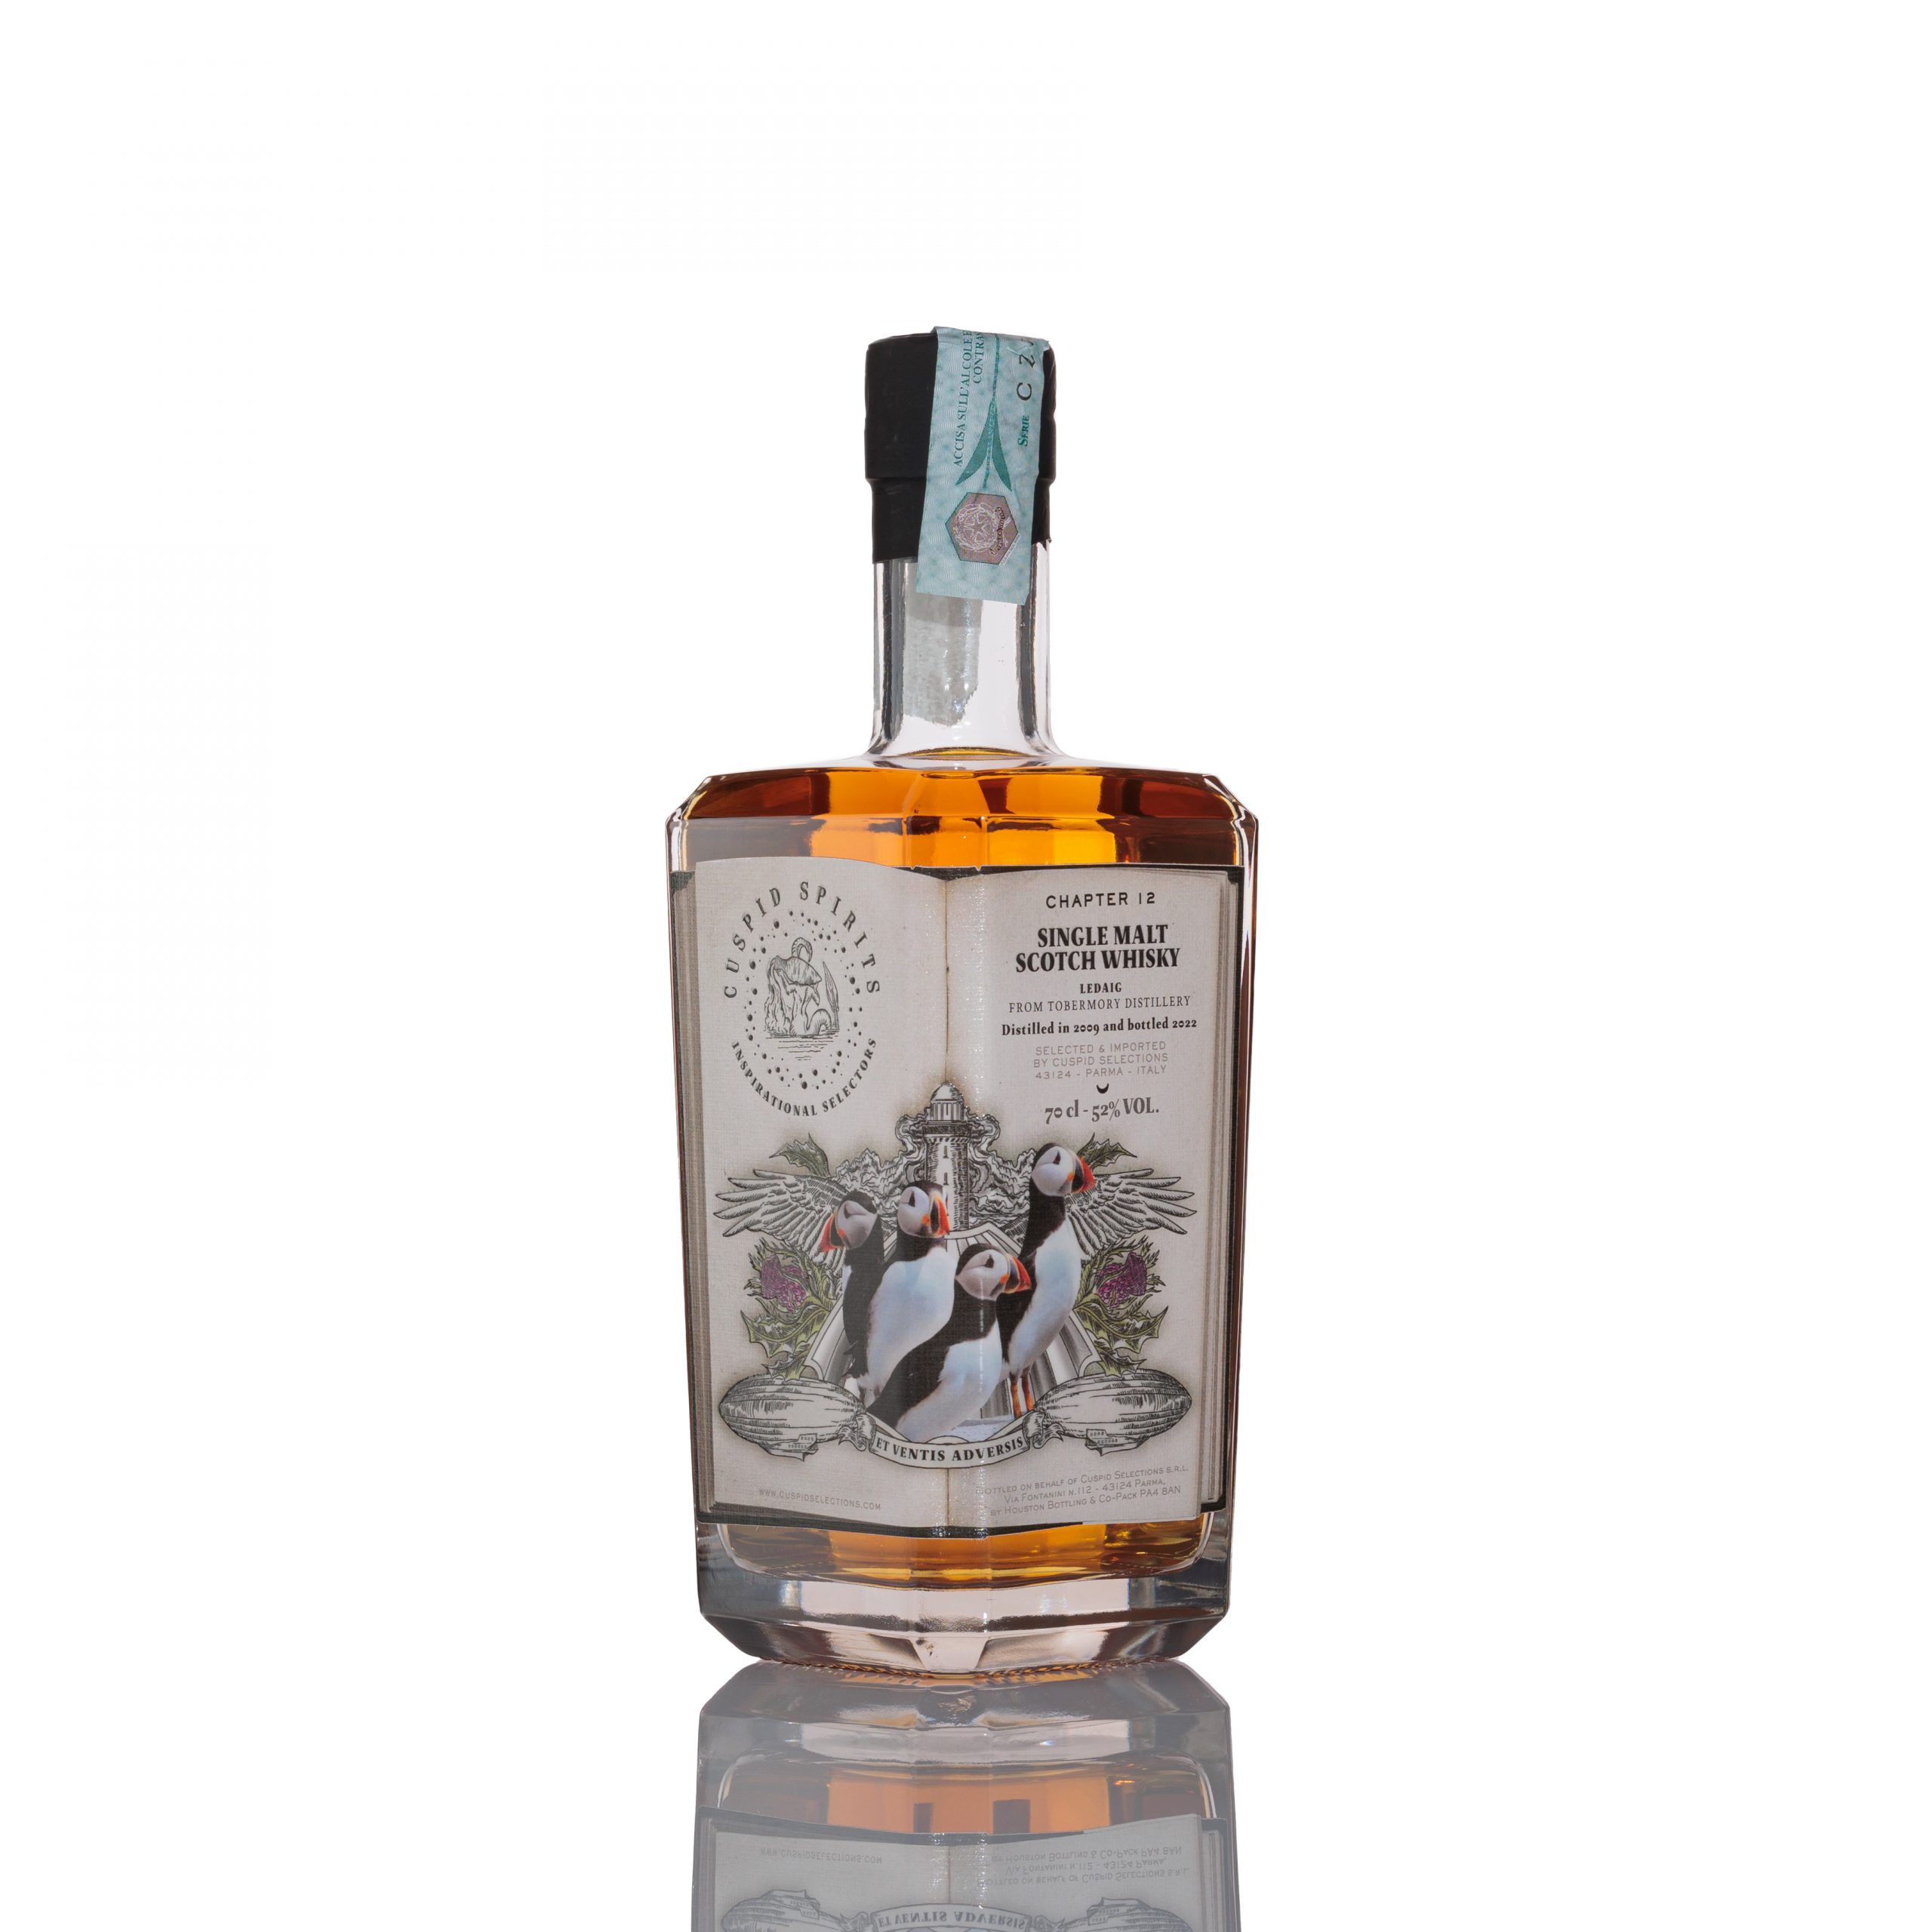 Single Malt Scotch Whisky Ledaig 1 Cuspid Selections